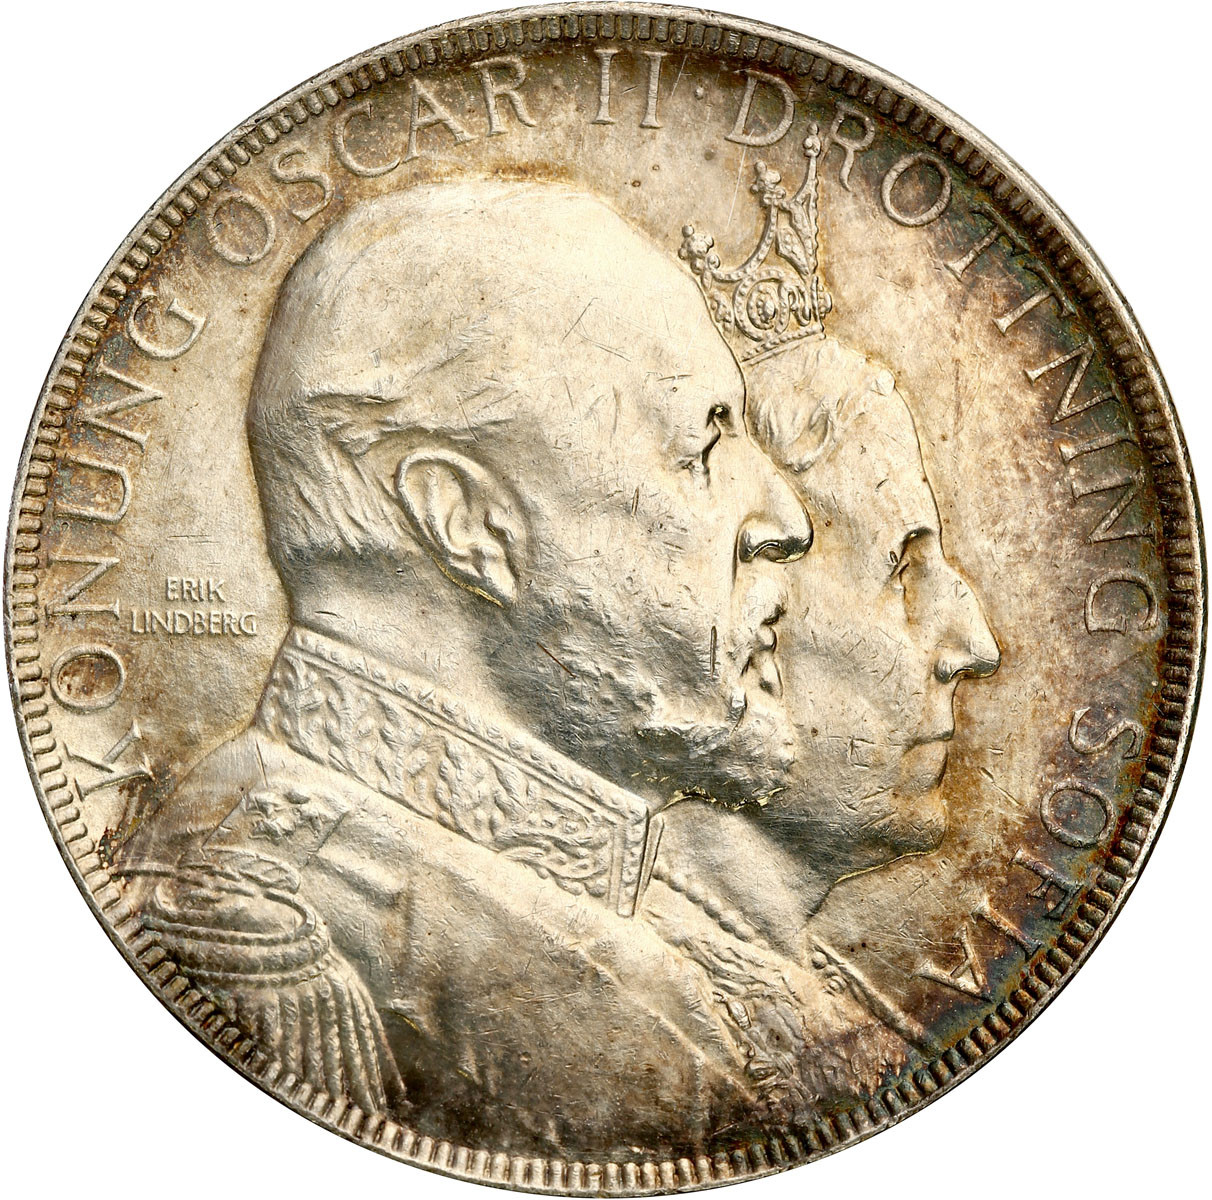 Szwecja. Medal Oscar II, 1907, srebro